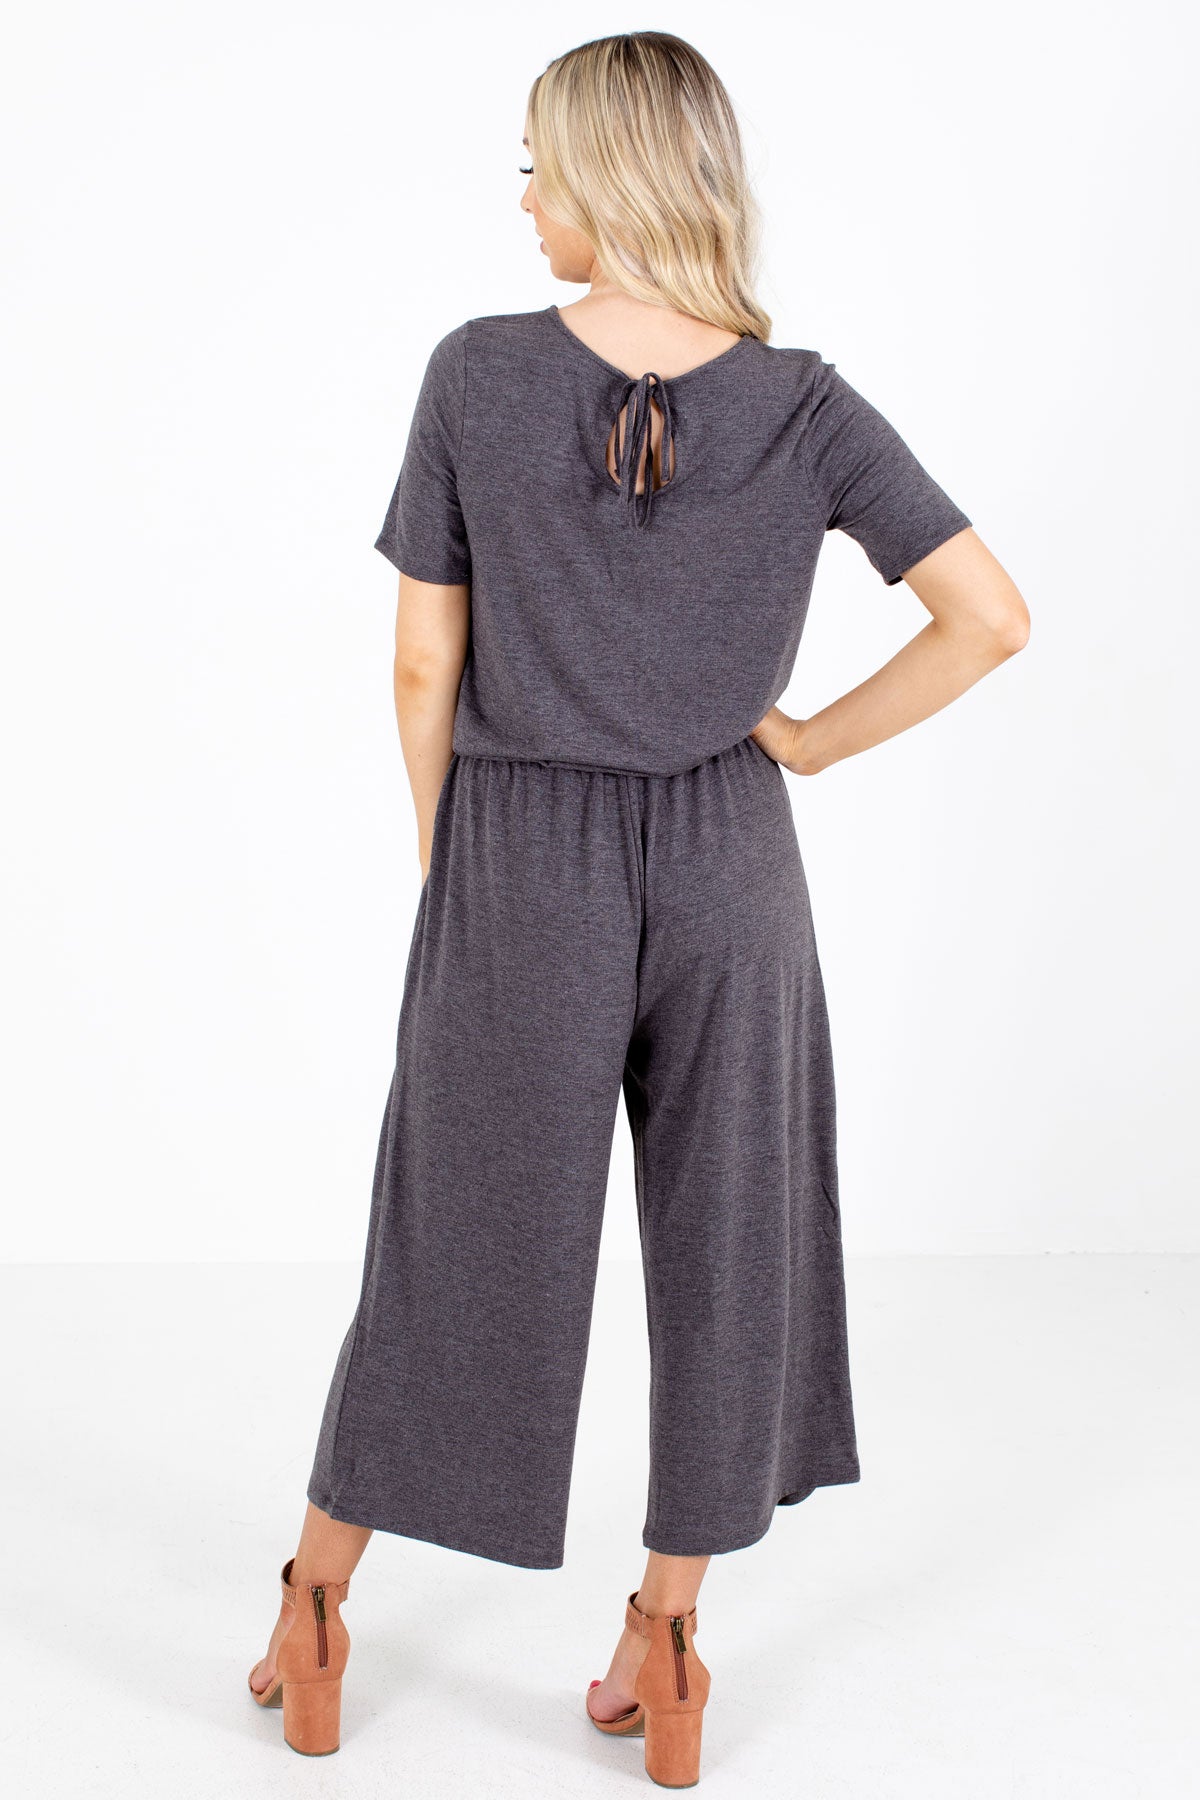 Women's Gray Short Sleeve Boutique Jumpsuits